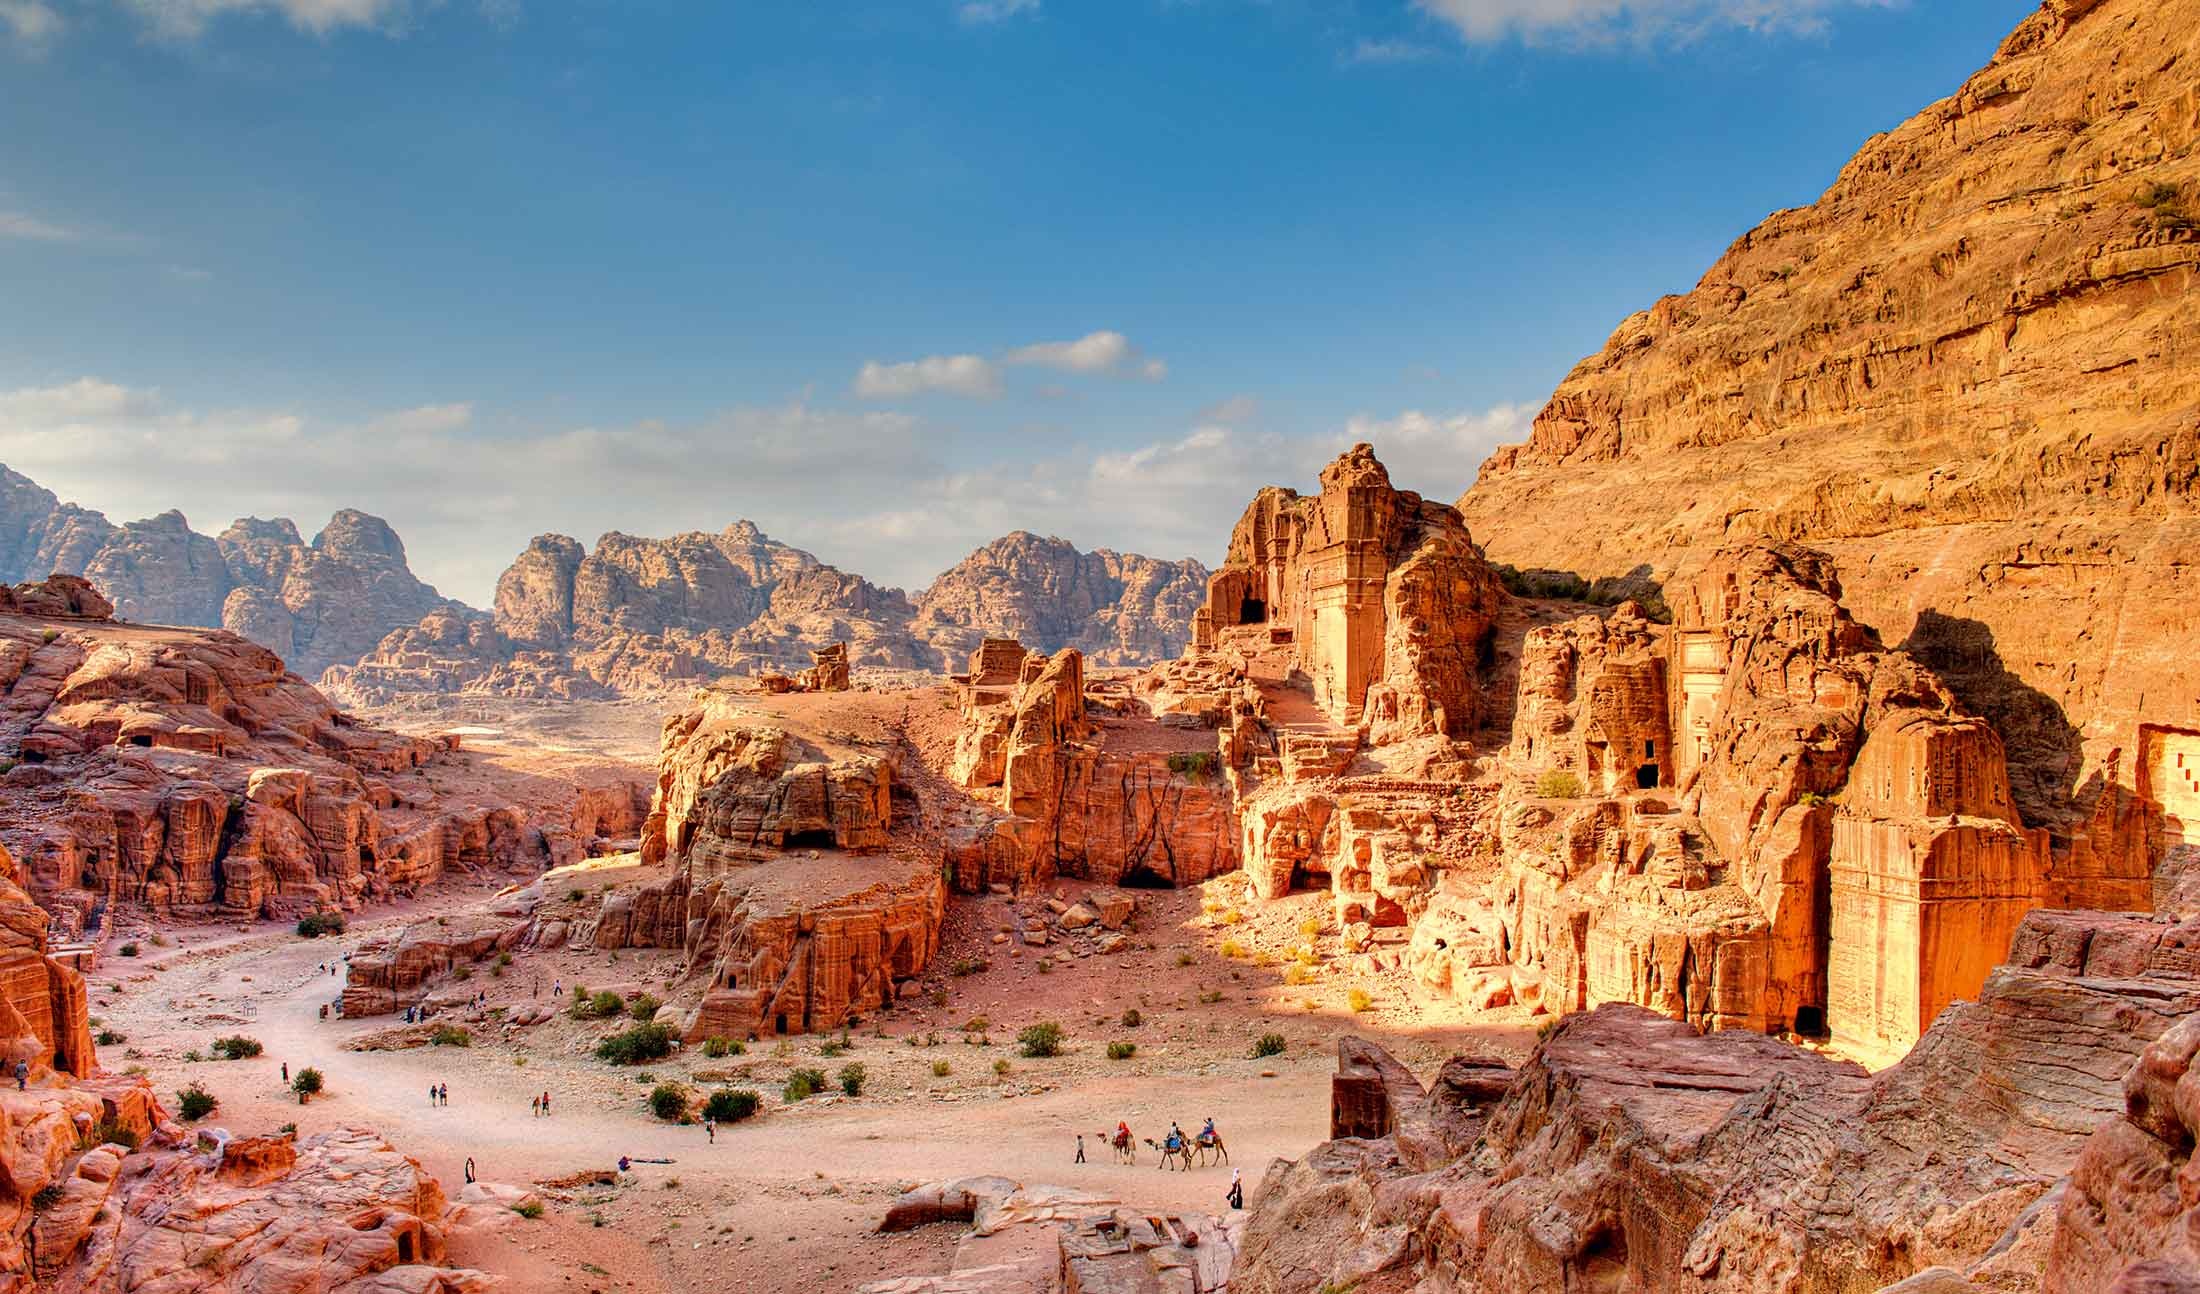 Jordan country wallpapers, Cultural diversity, Exquisite landscapes, Middle Eastern charm, 2200x1300 HD Desktop